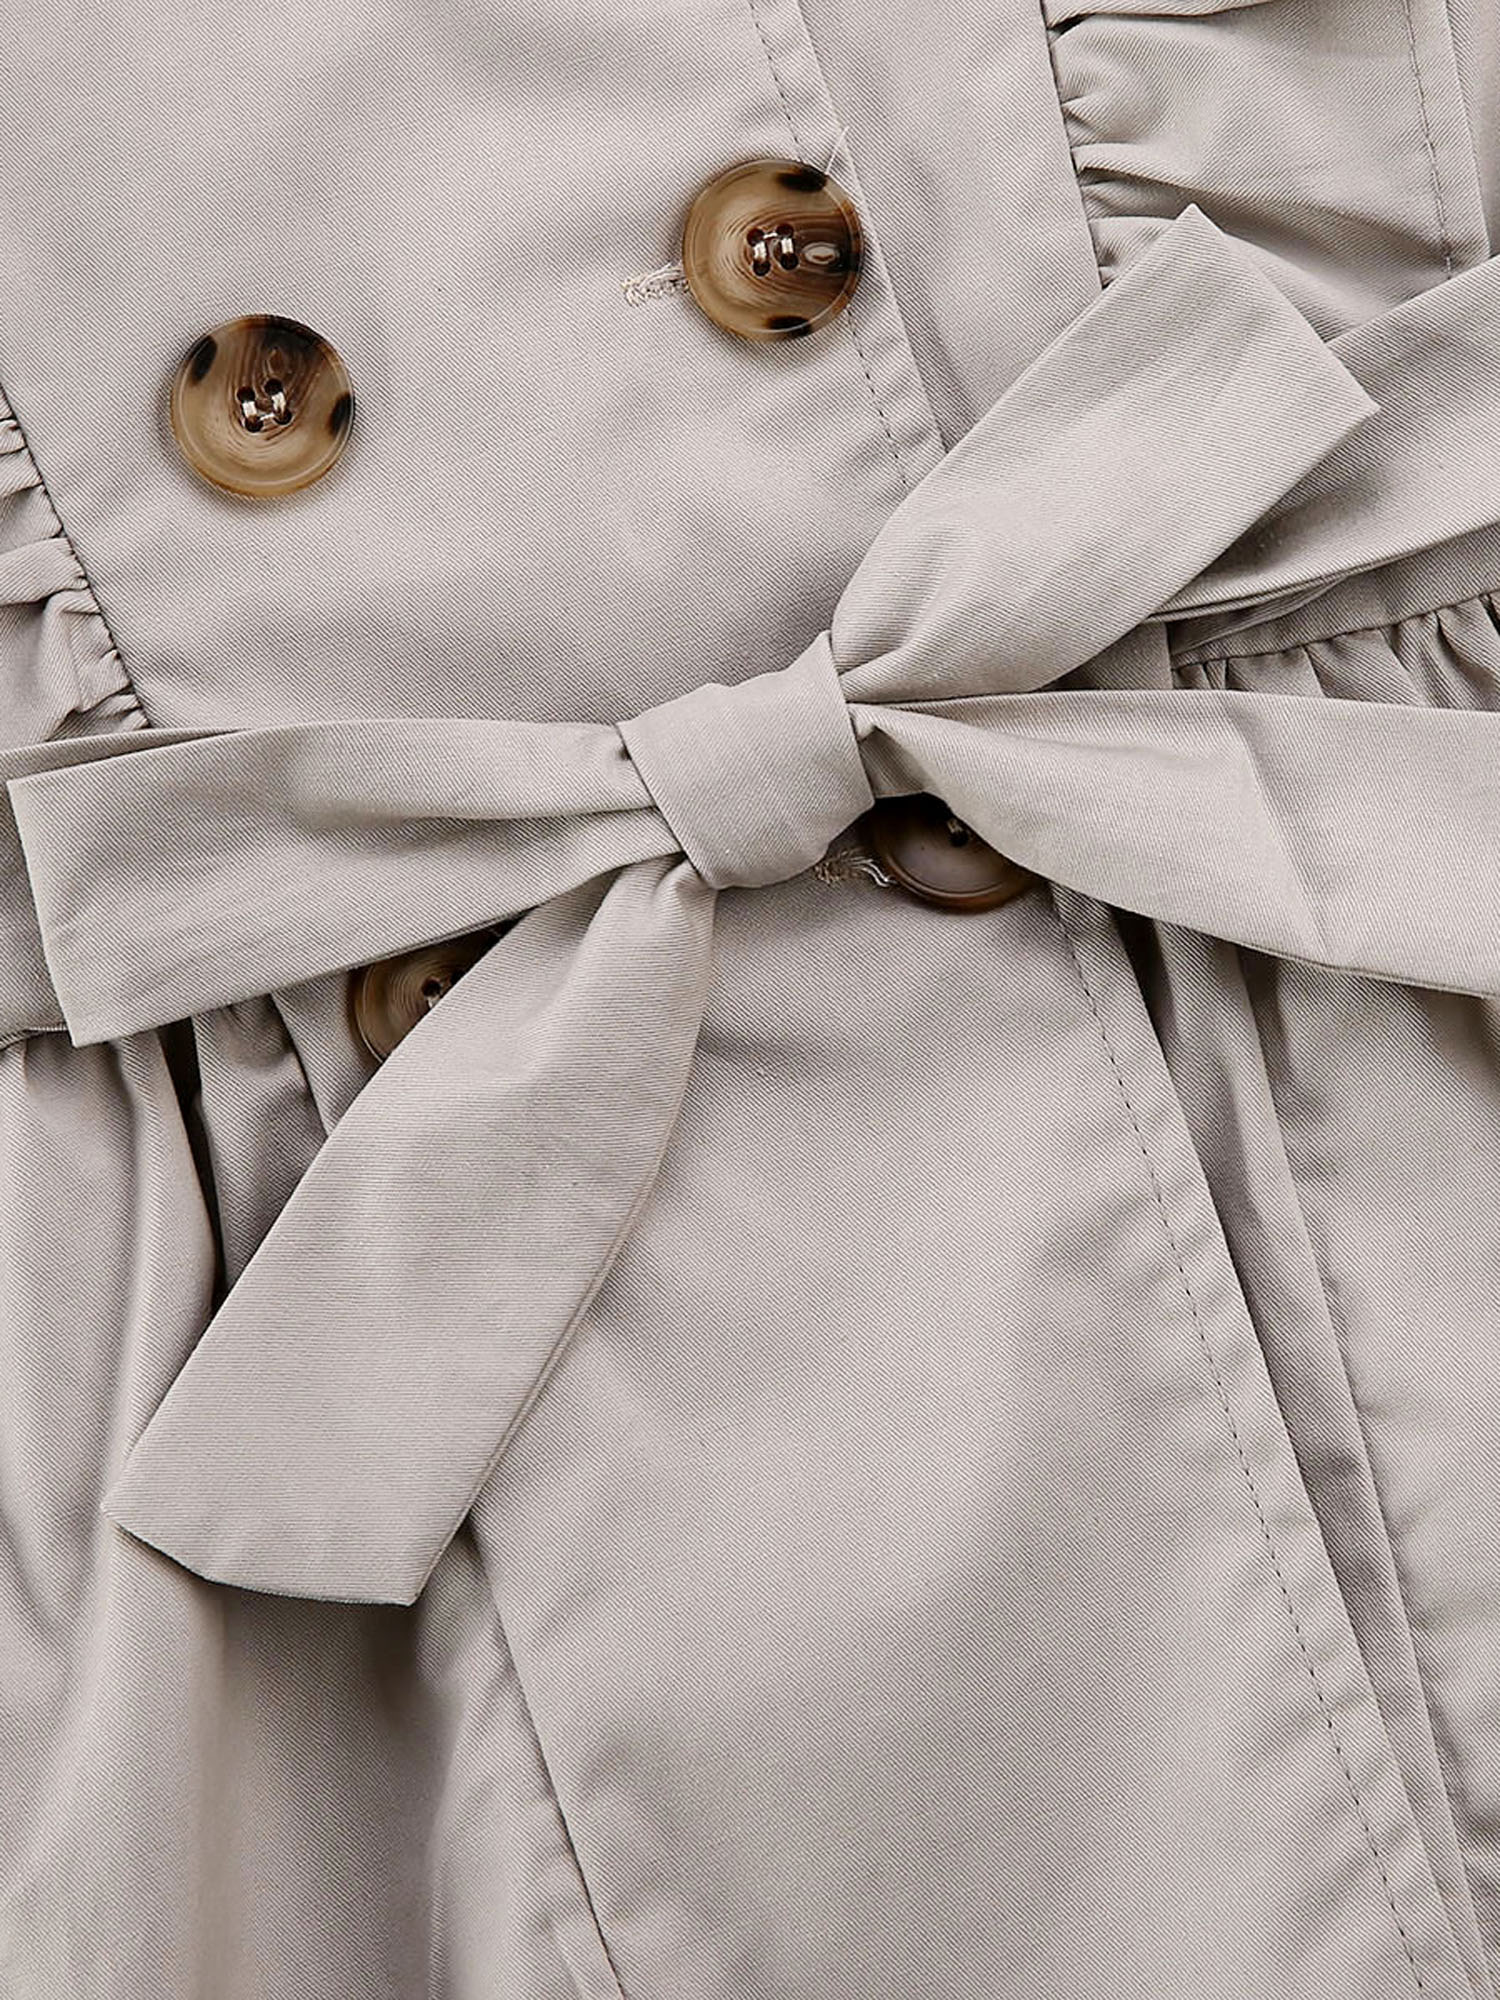 Xingqing Toddler Baby Girl Trench Coat Casual Ruffle Jacket Windbreaker Outerwear - image 5 of 6